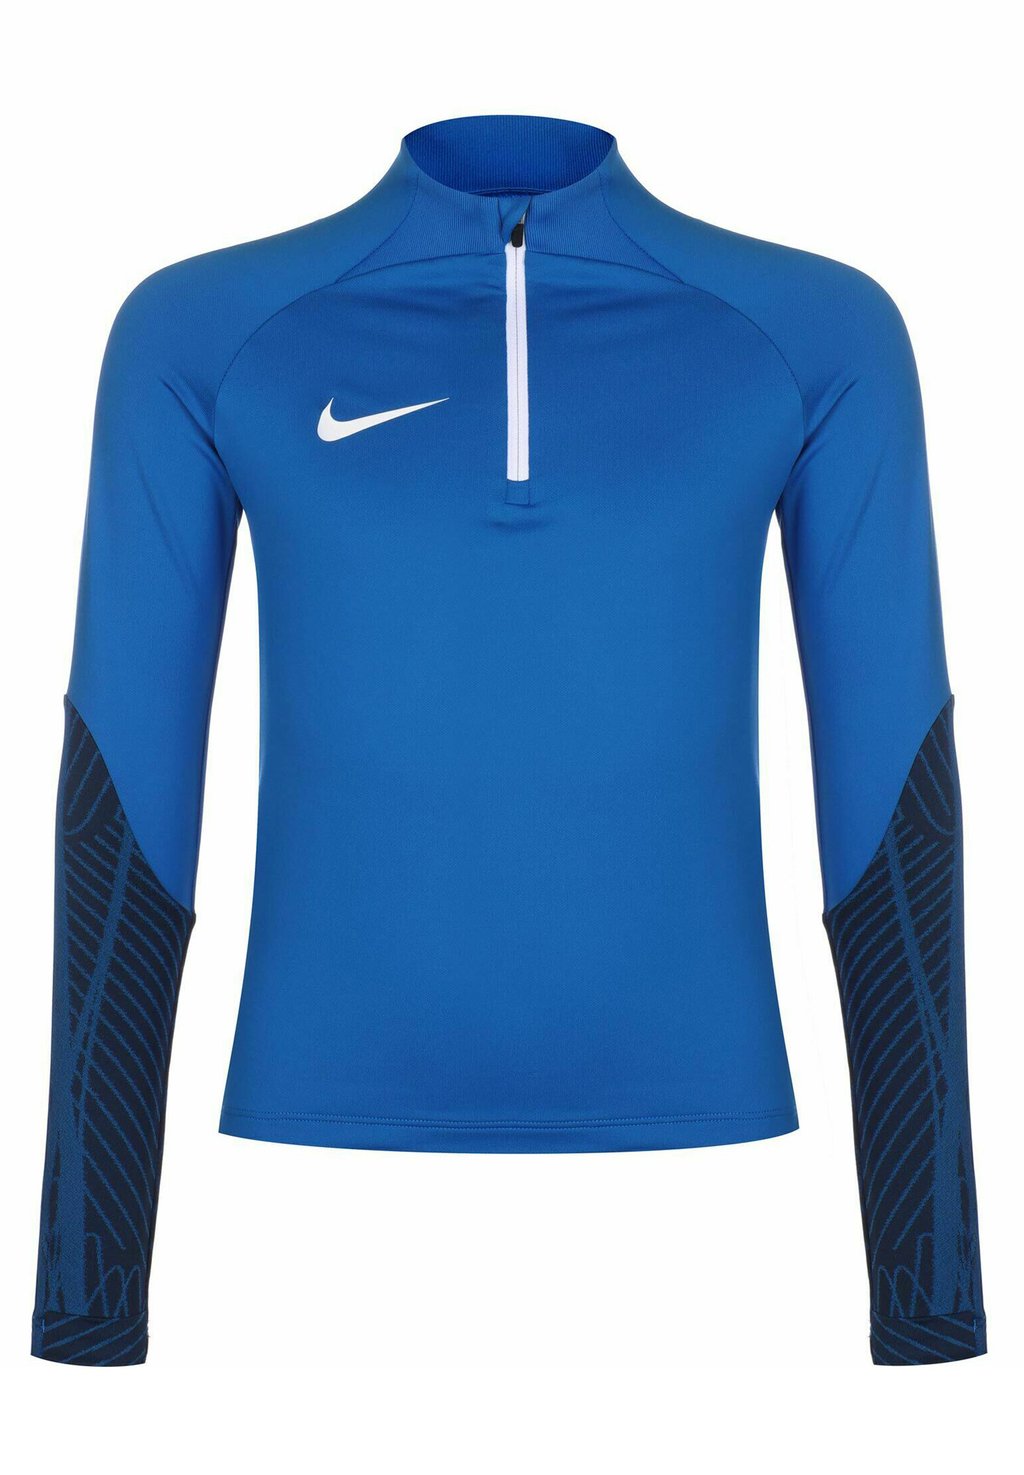 Футболка с длинным рукавом Dri Fit Strike 23 Drill Nike, цвет royal blue obsidian royal blue/white цена и фото